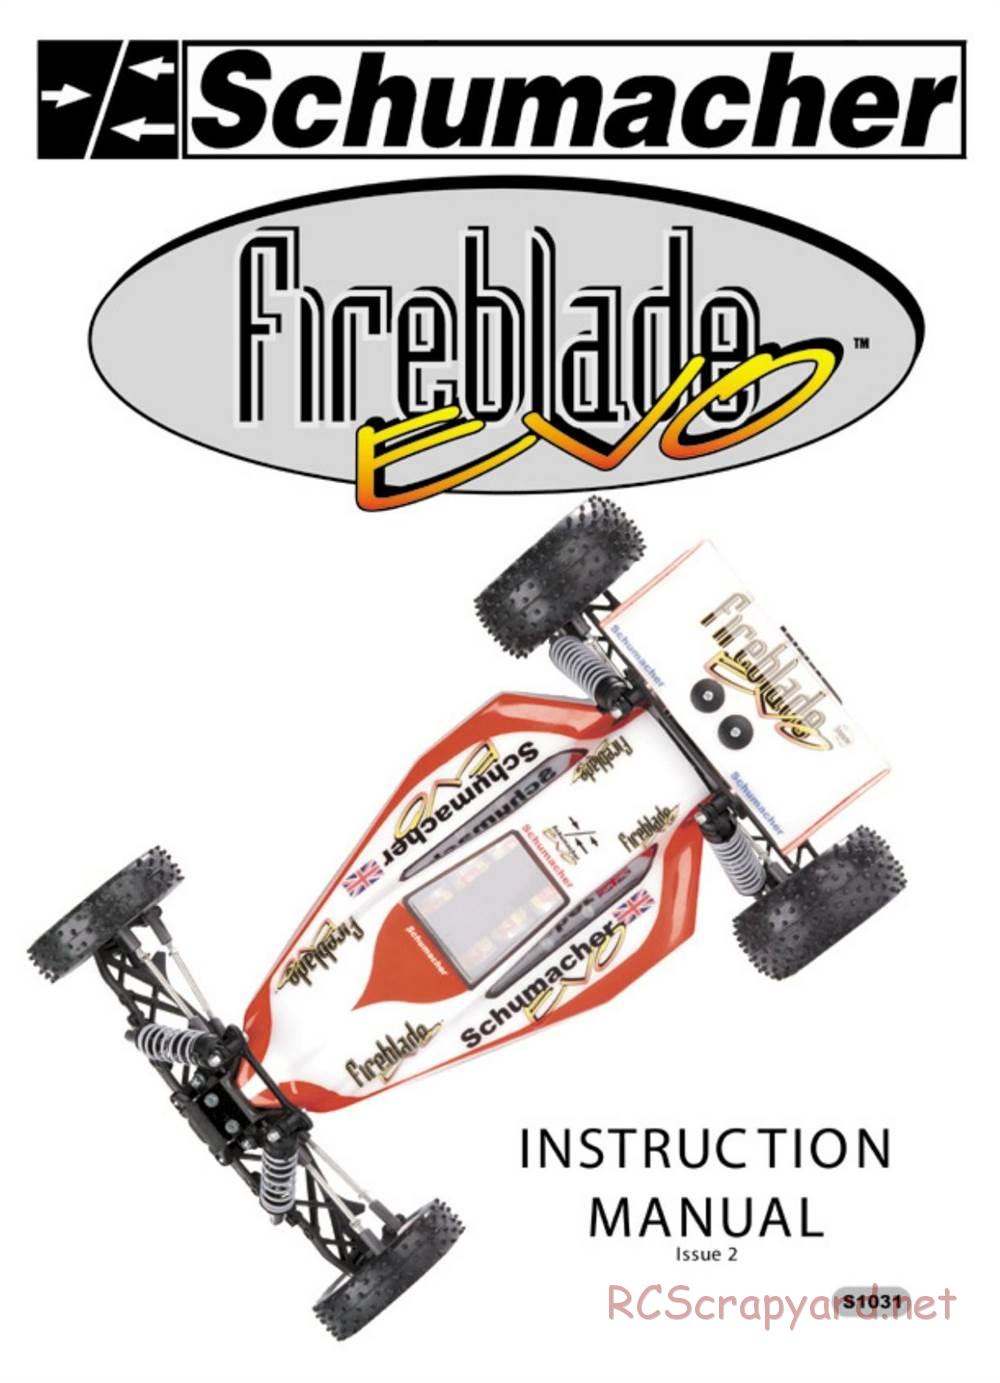 Schumacher - Fireblade Evo - Manual - Page 1